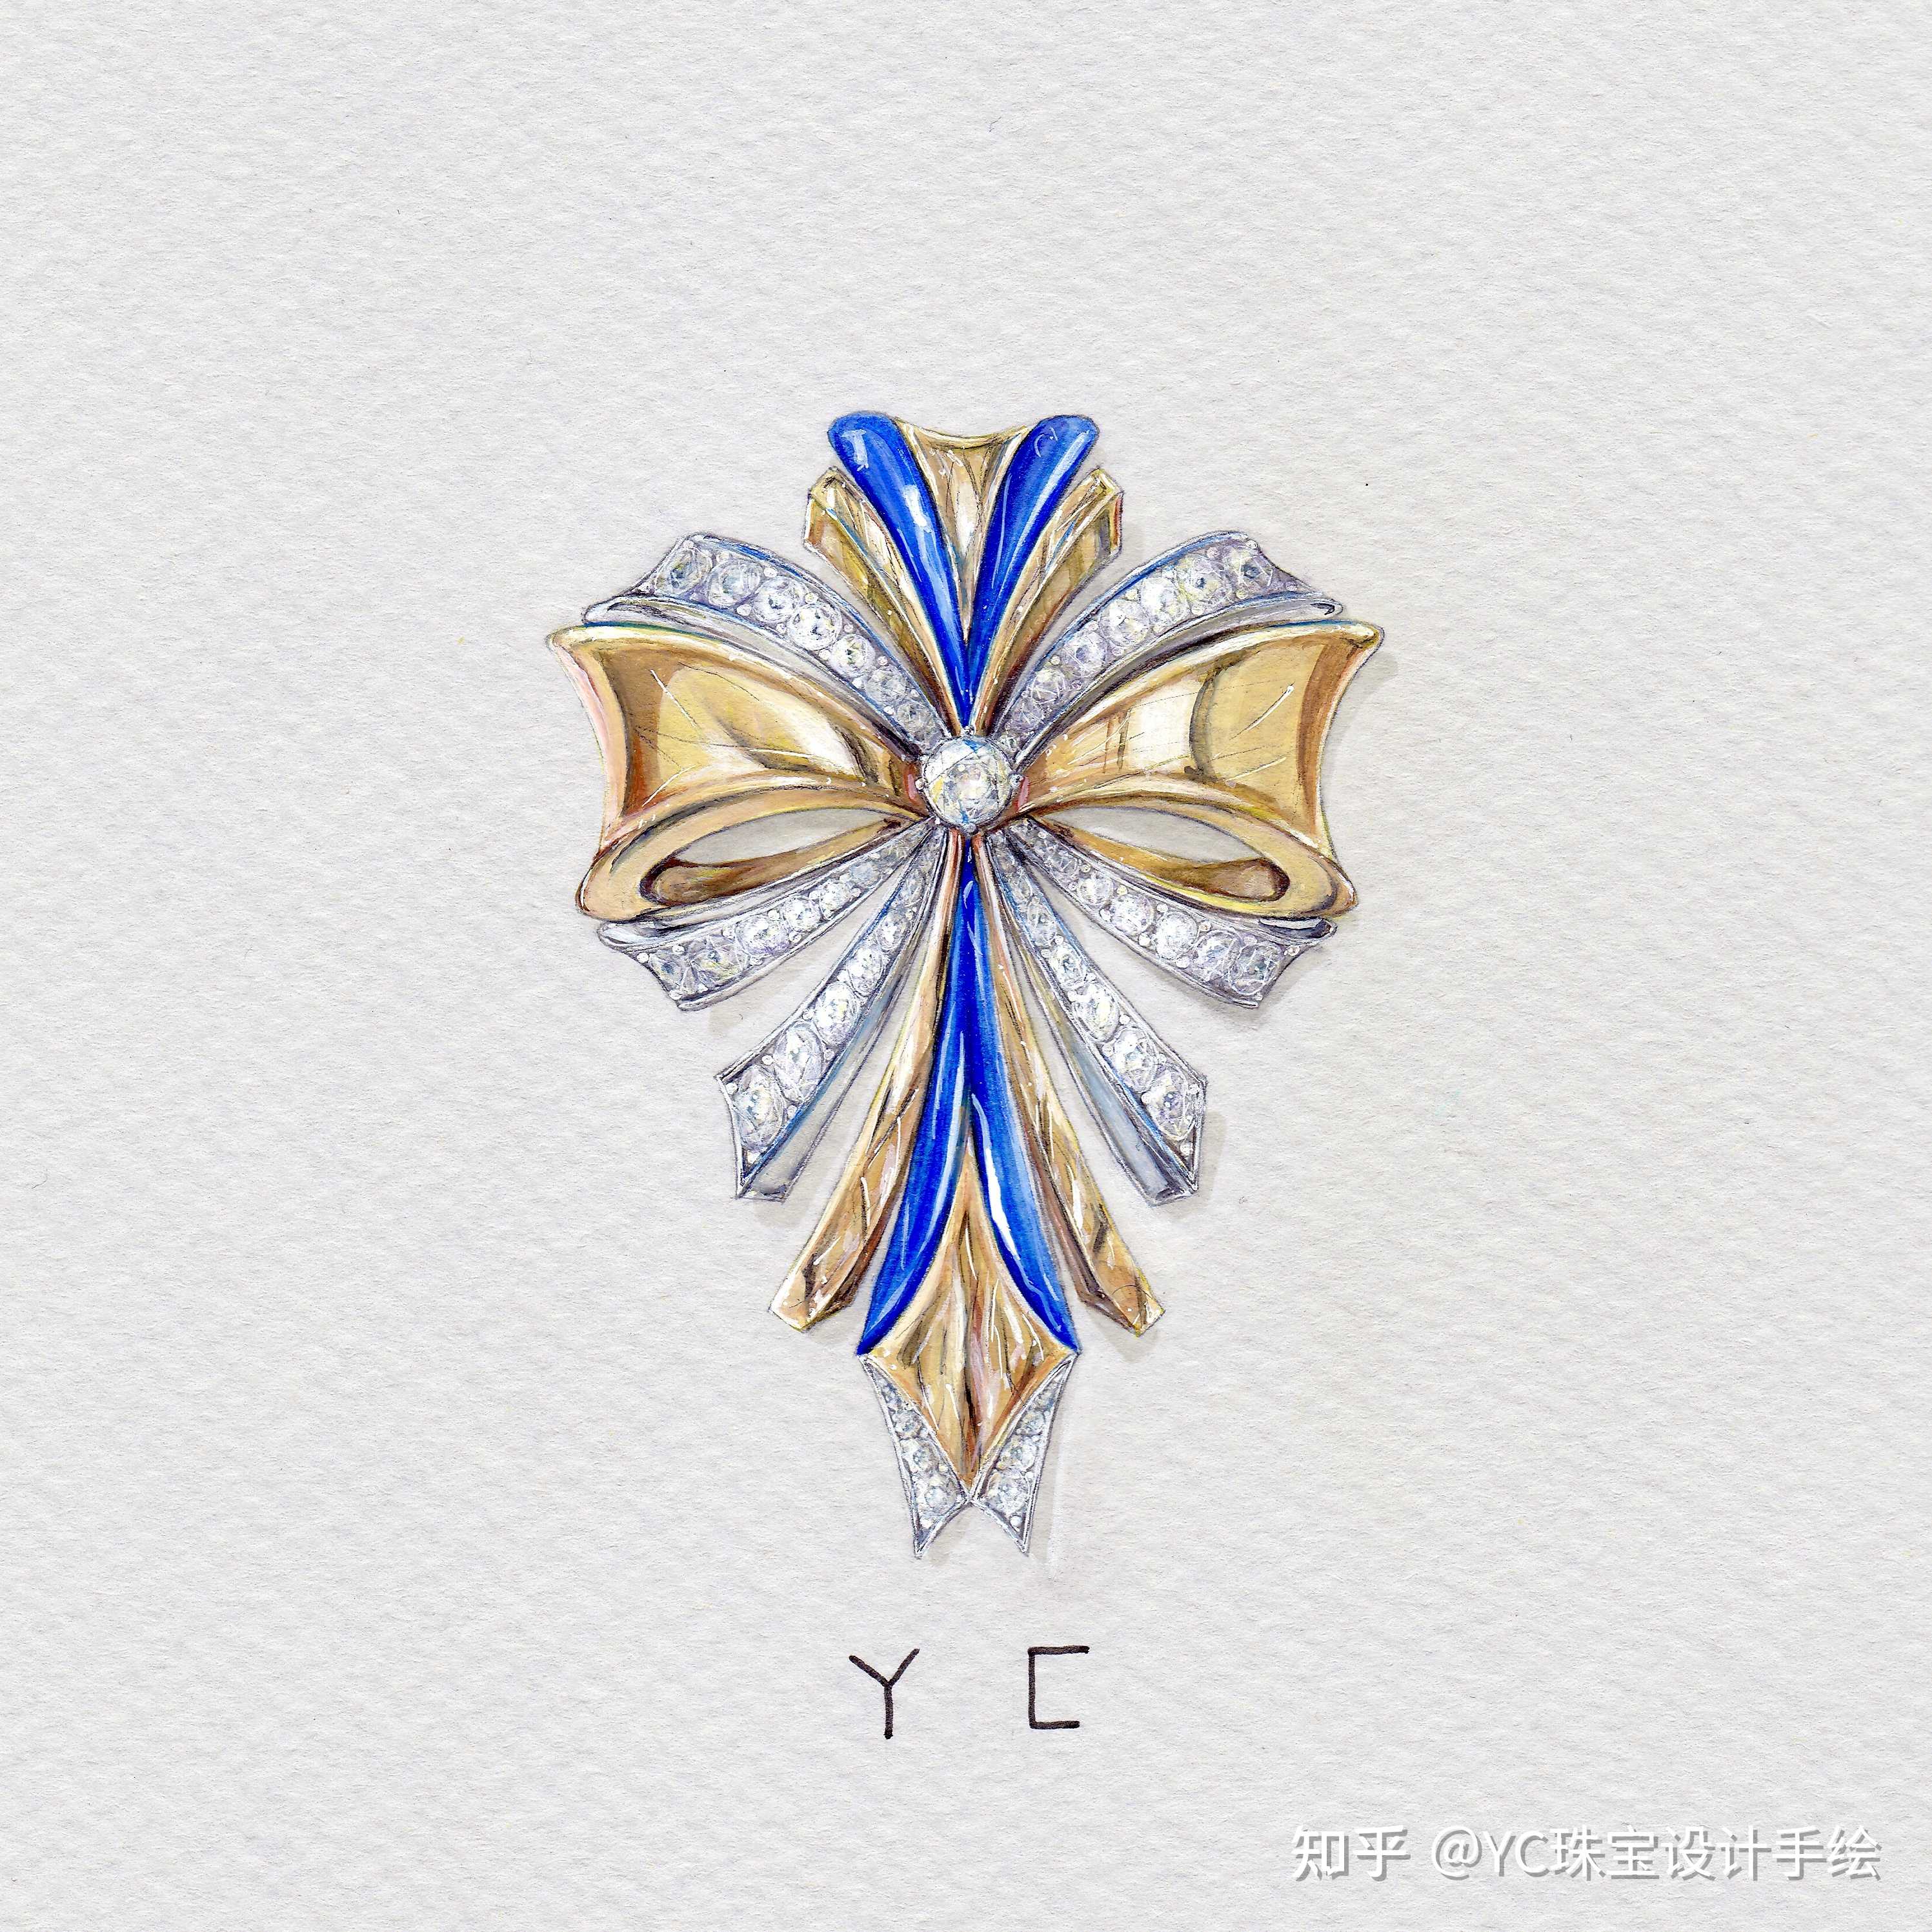 yc珠宝设计手绘 的想法: 荣耀的胸针 水彩手绘设计